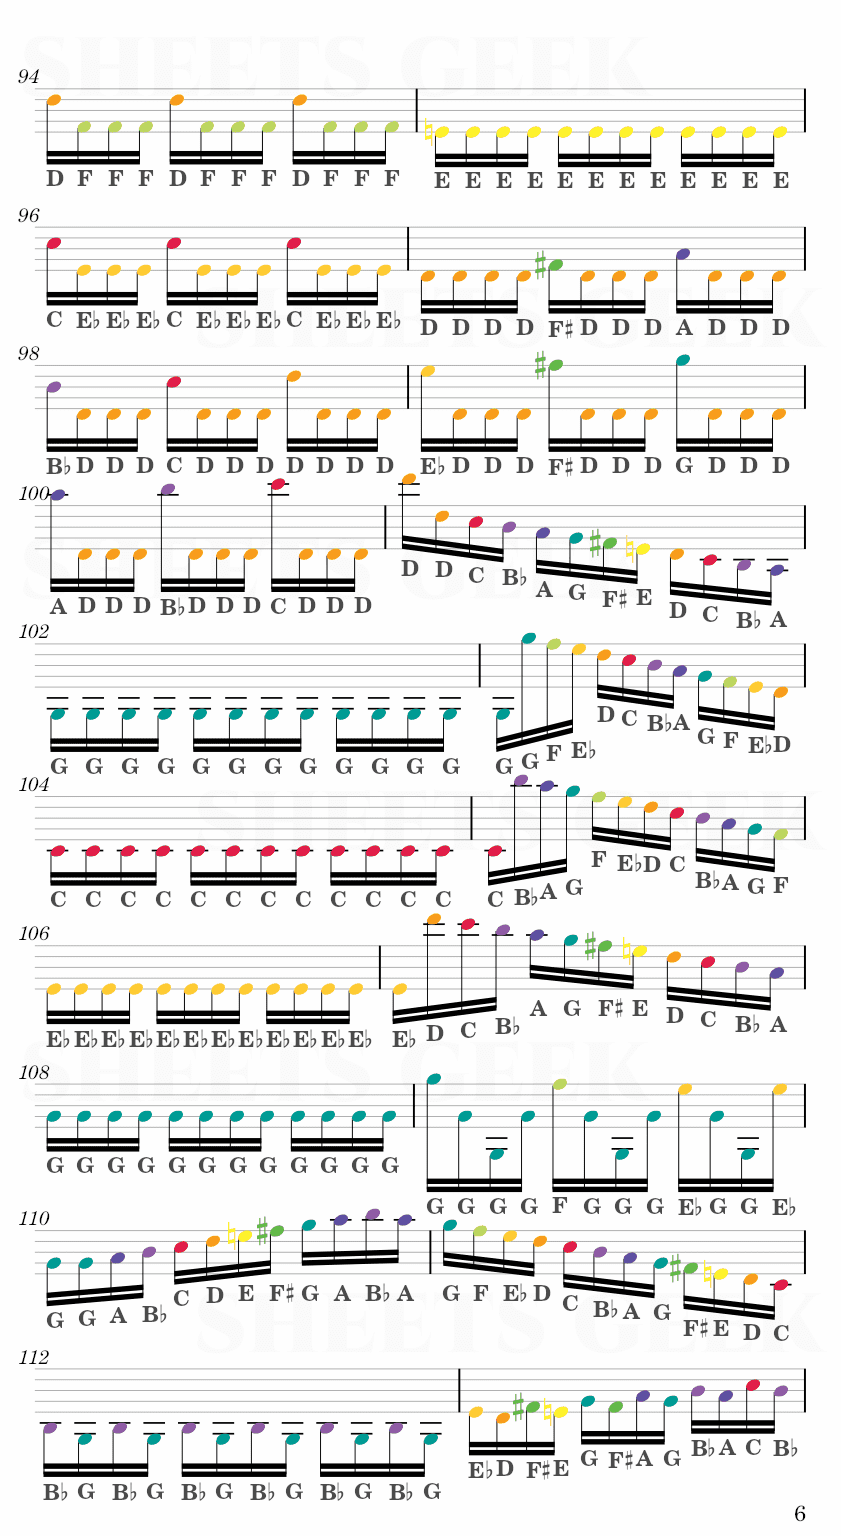 Summer Third Movement - Vivaldi Easy Sheet Music Free for piano, keyboard, flute, violin, sax, cello page 6